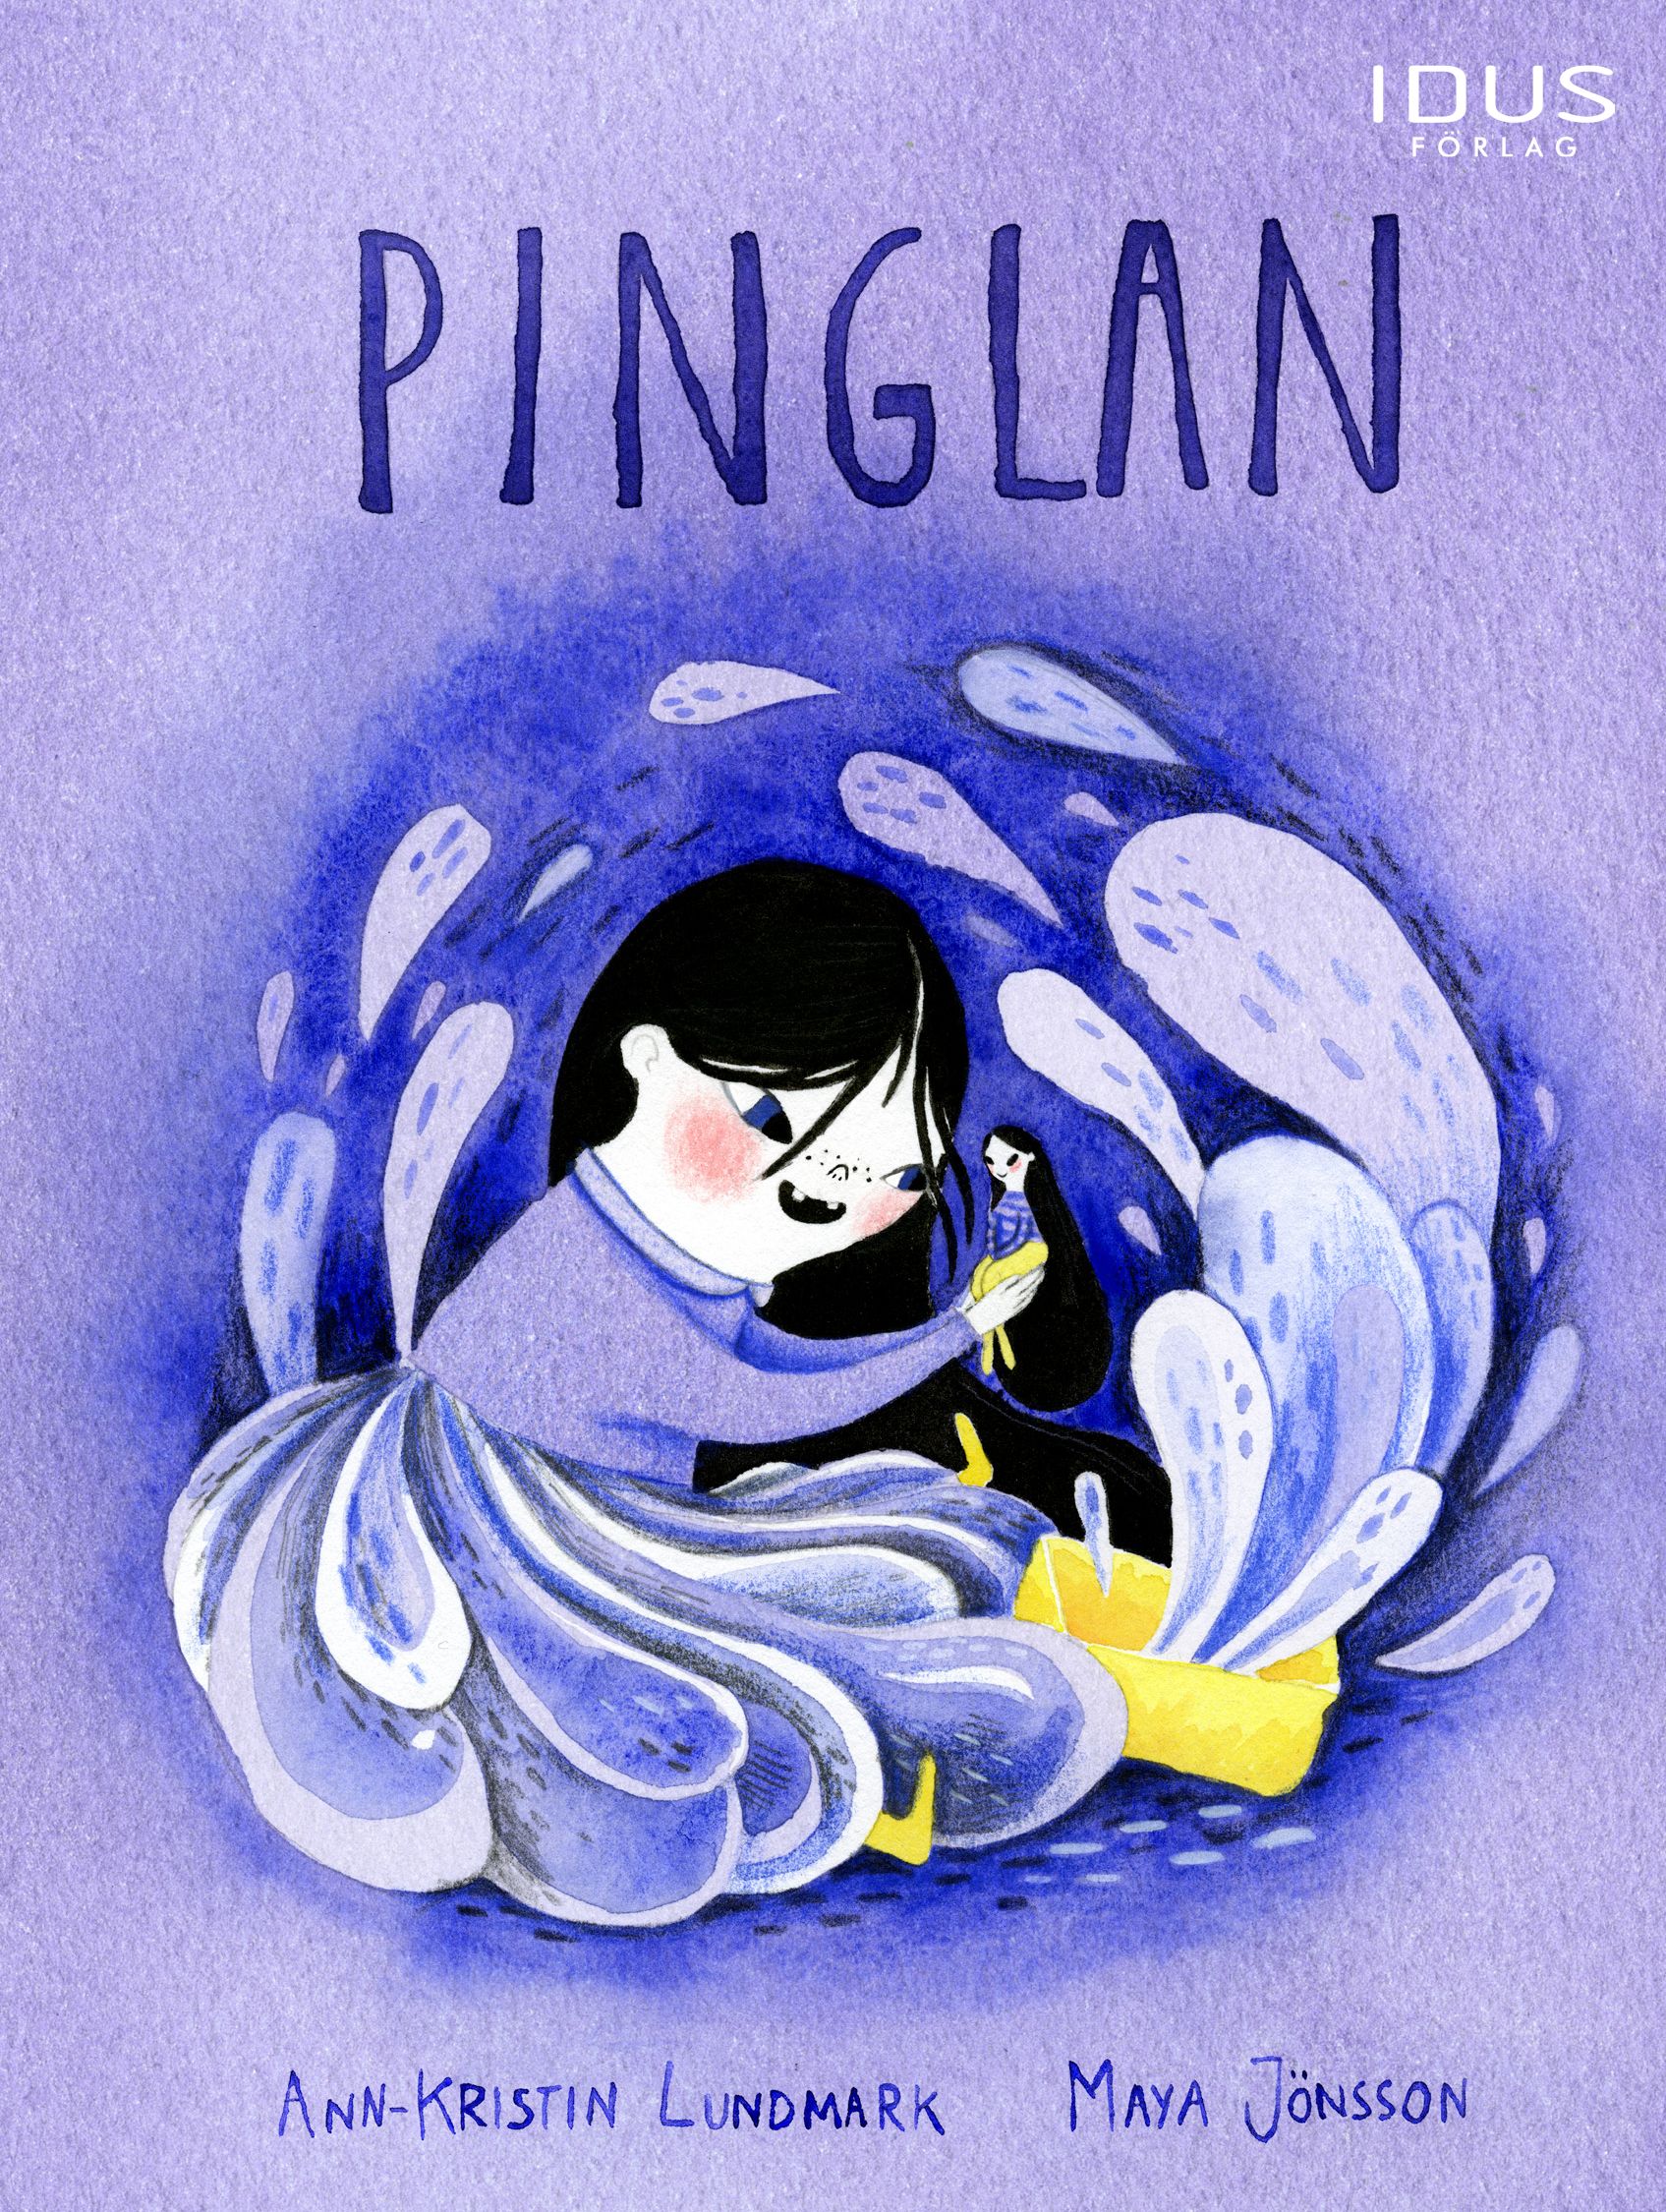 Pinglan, eBook by Ann-Kristin Lundmark